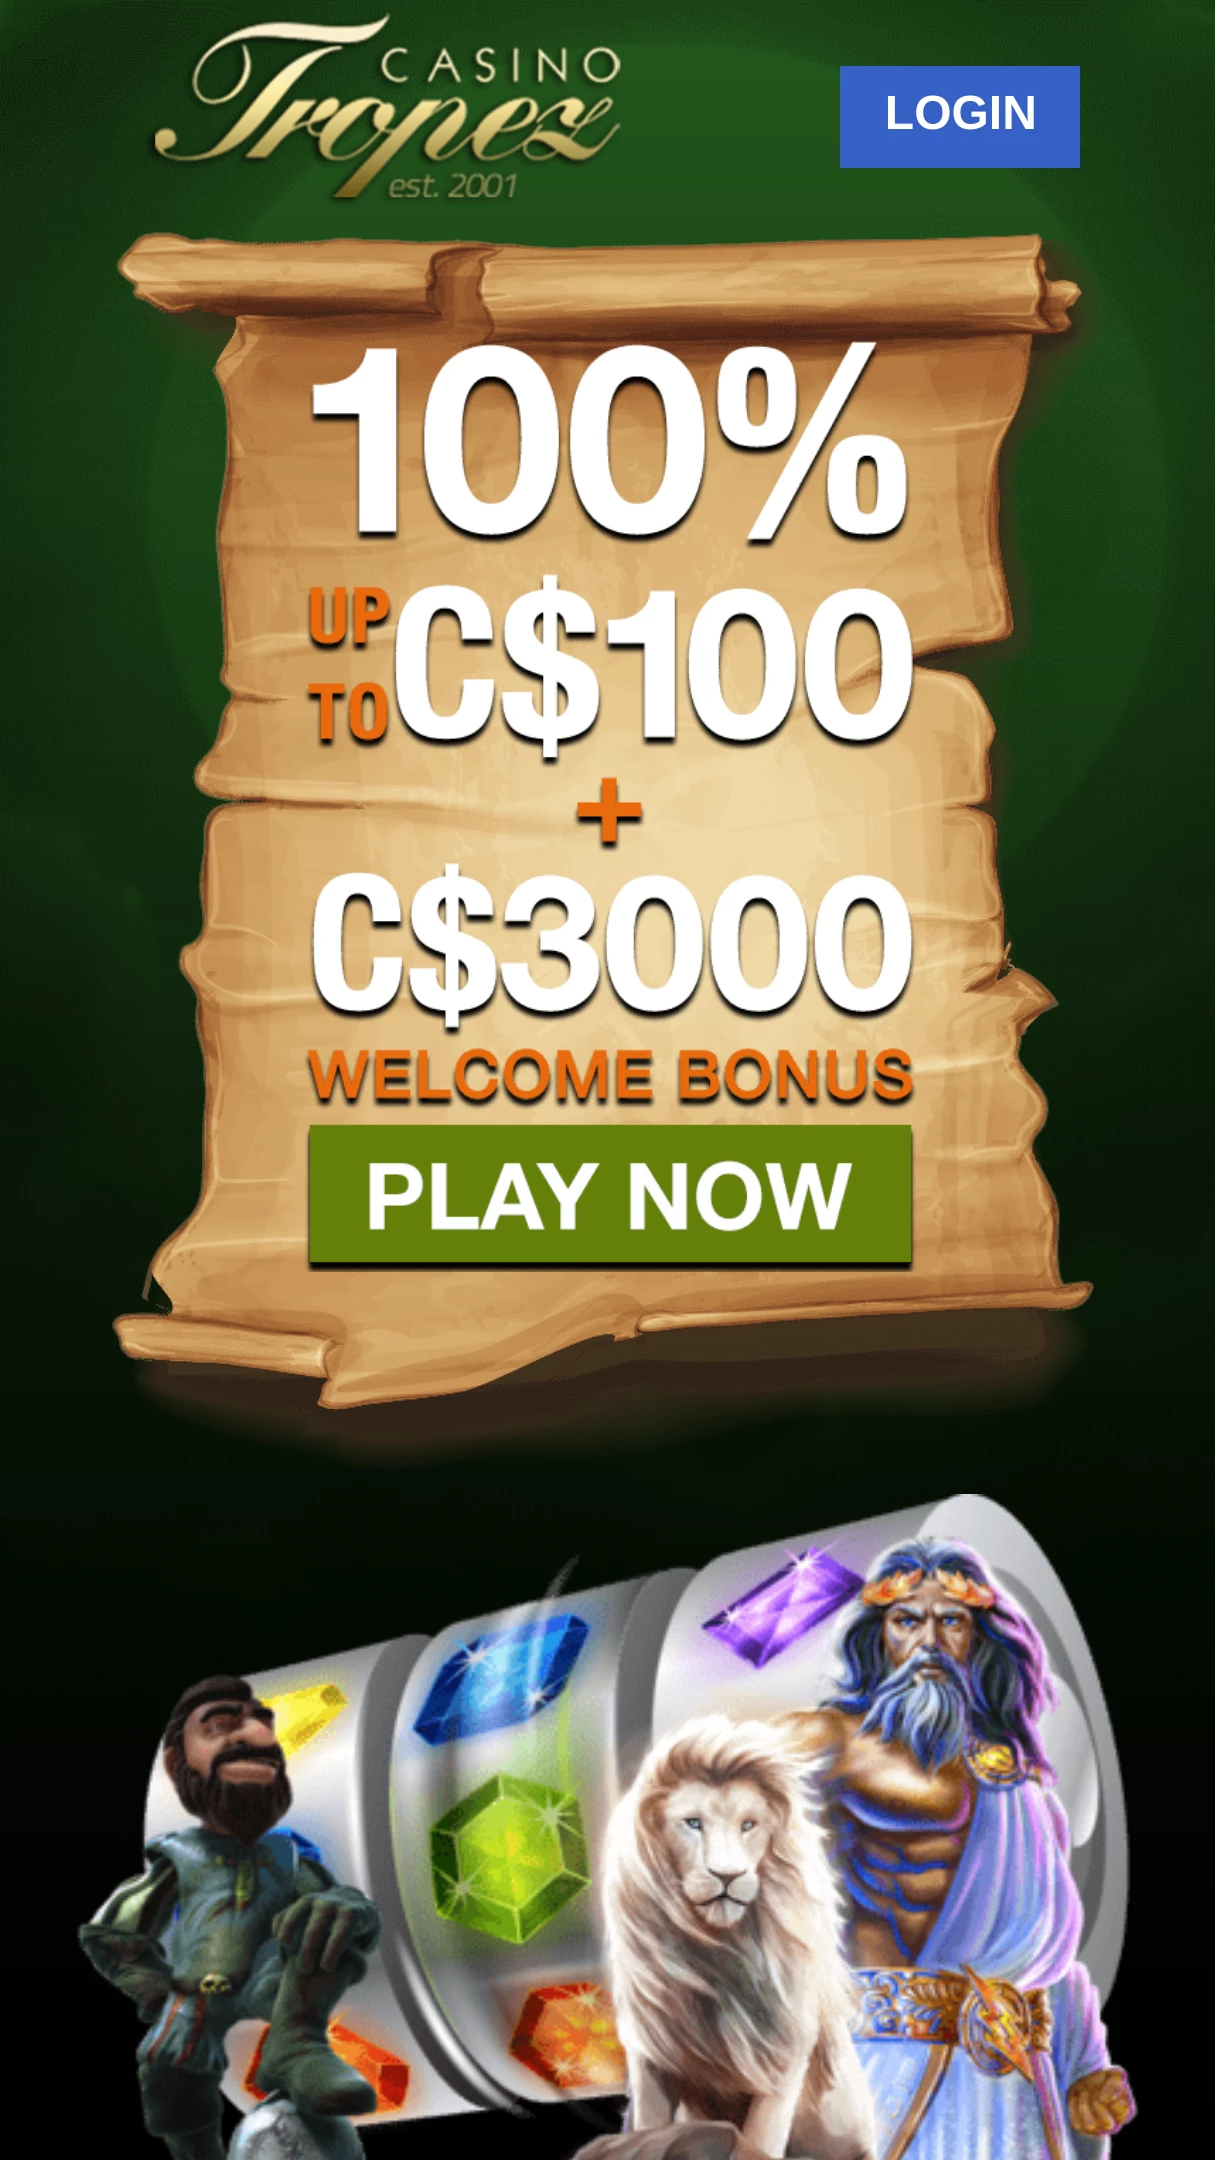 Casino Tropez Welcome Bonus